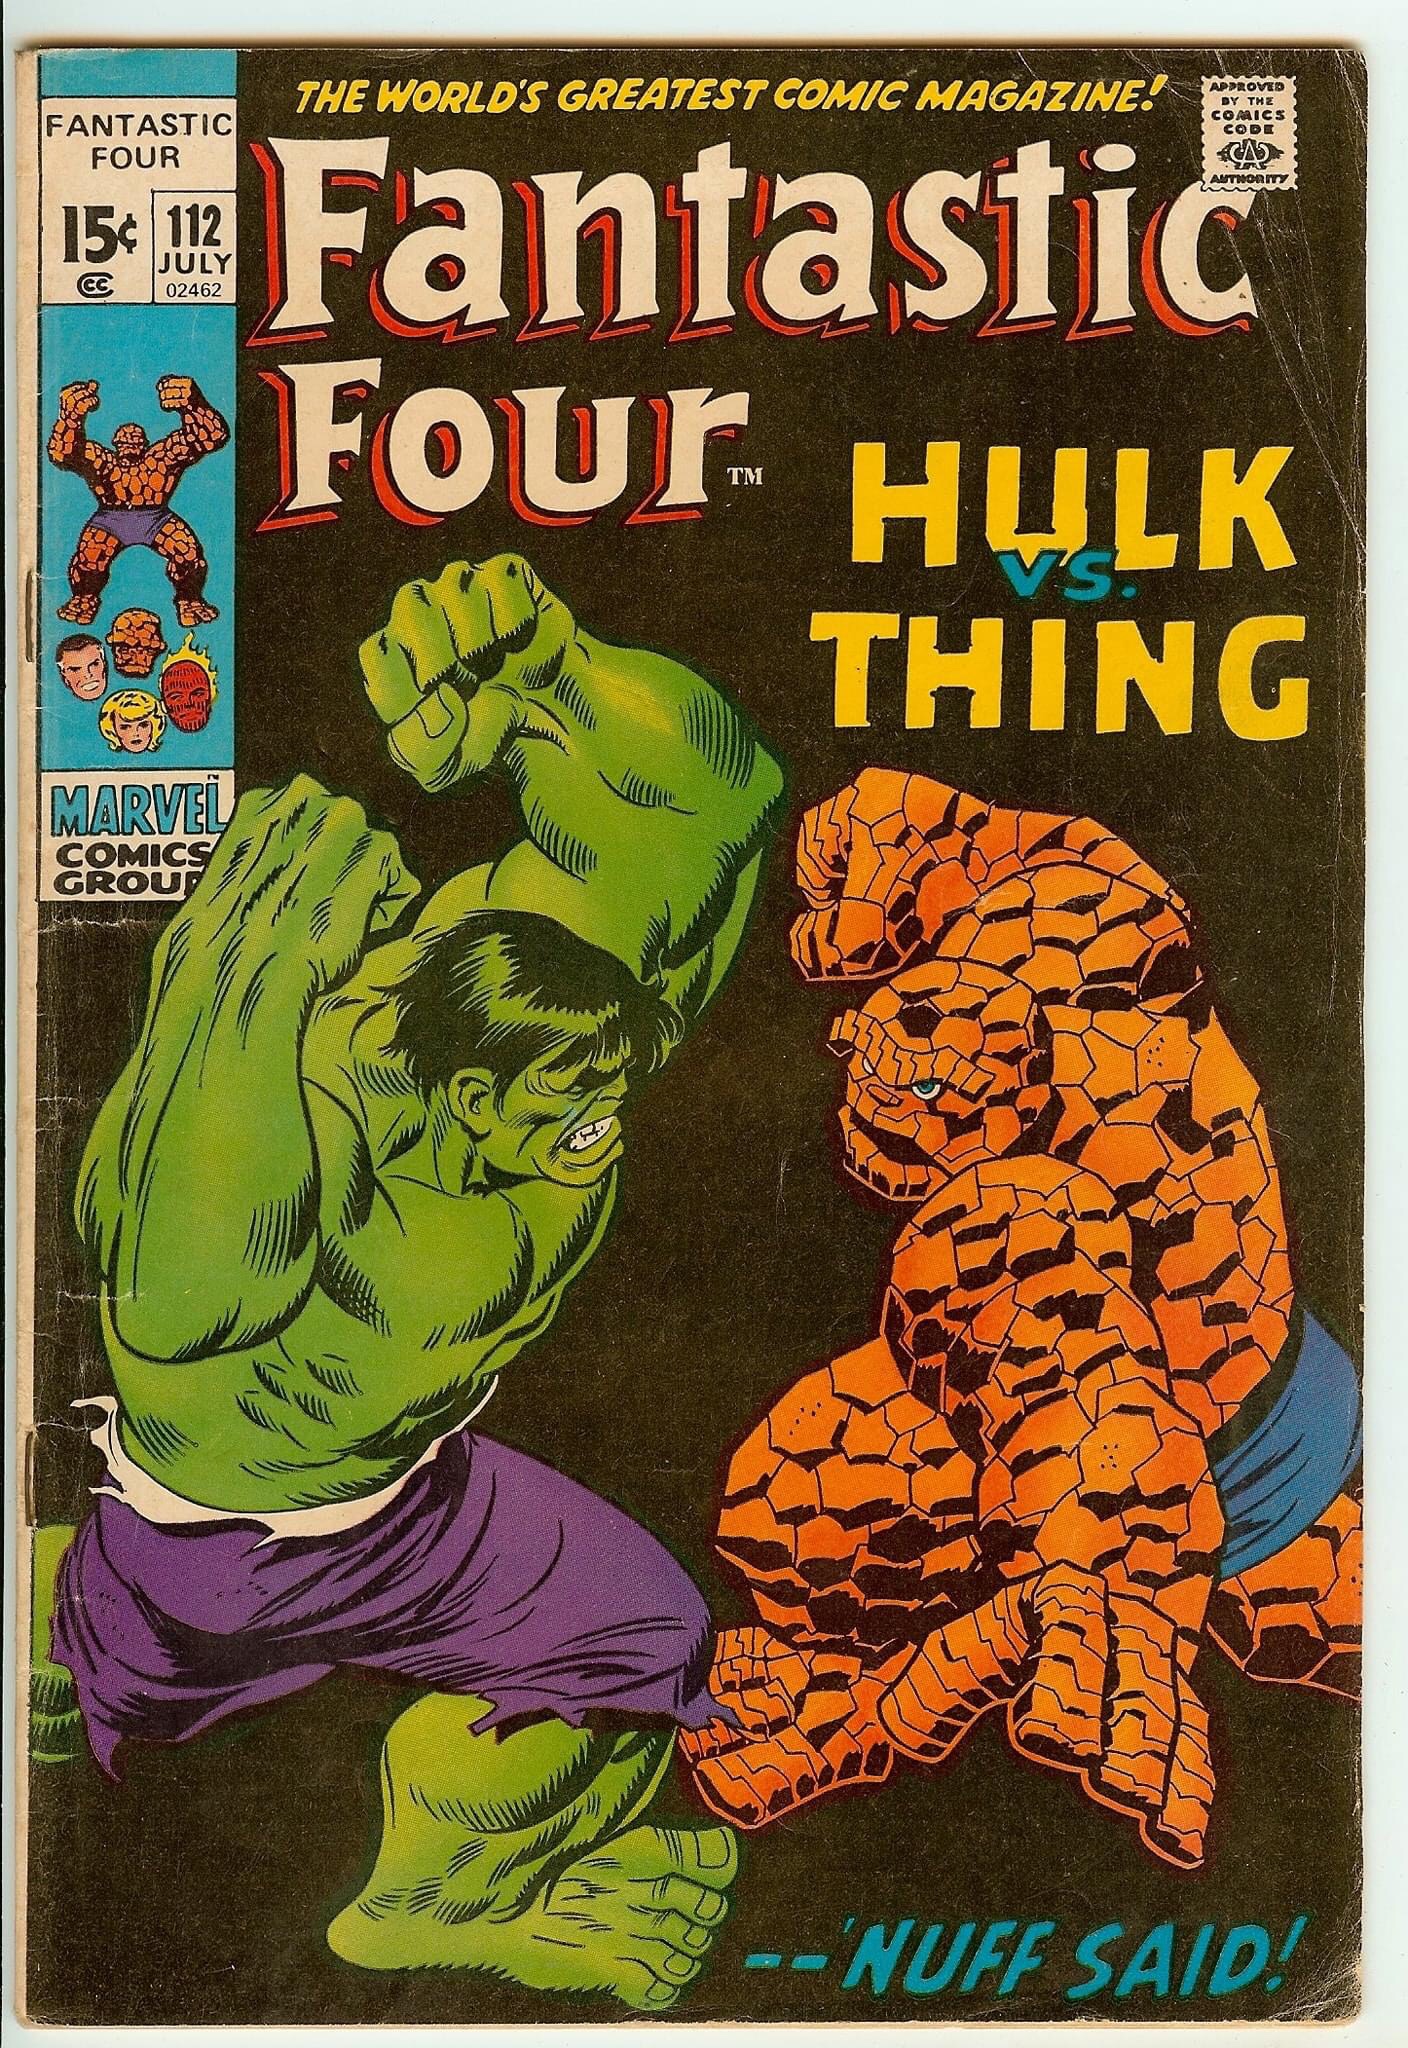 Fantastic Four #112 - Cover